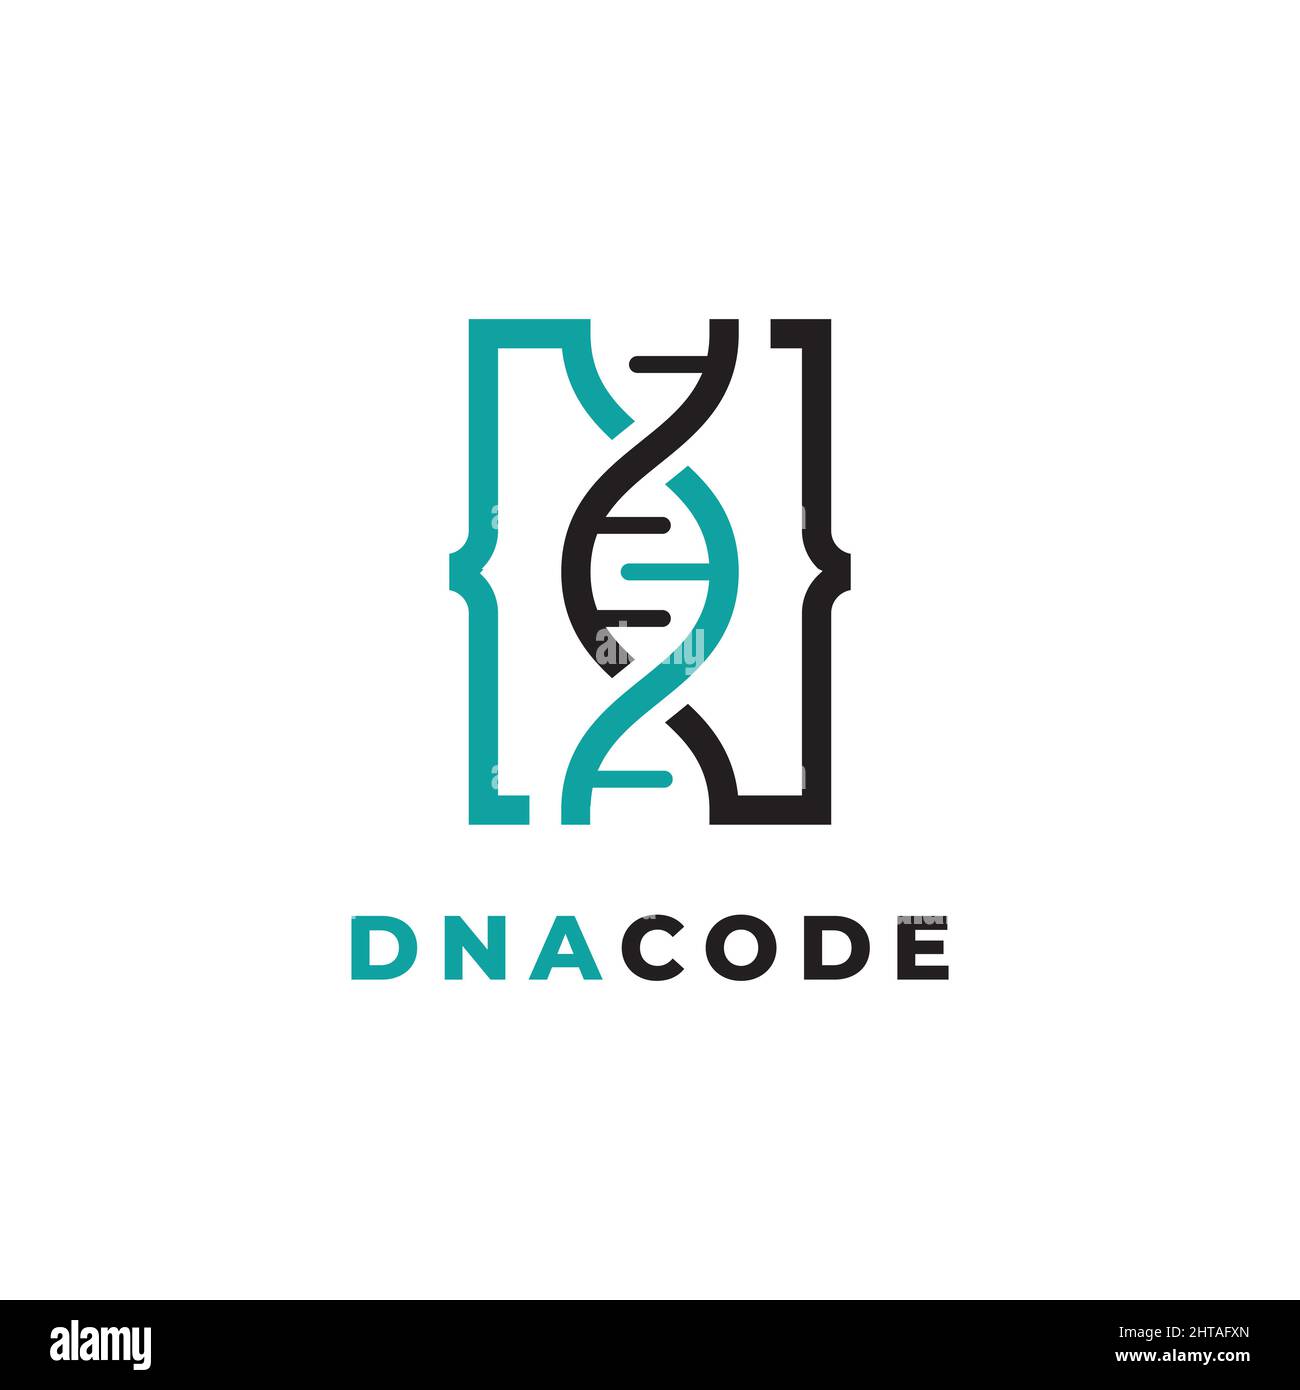 Dna code logo design symbol illustration vector template Stock Vector